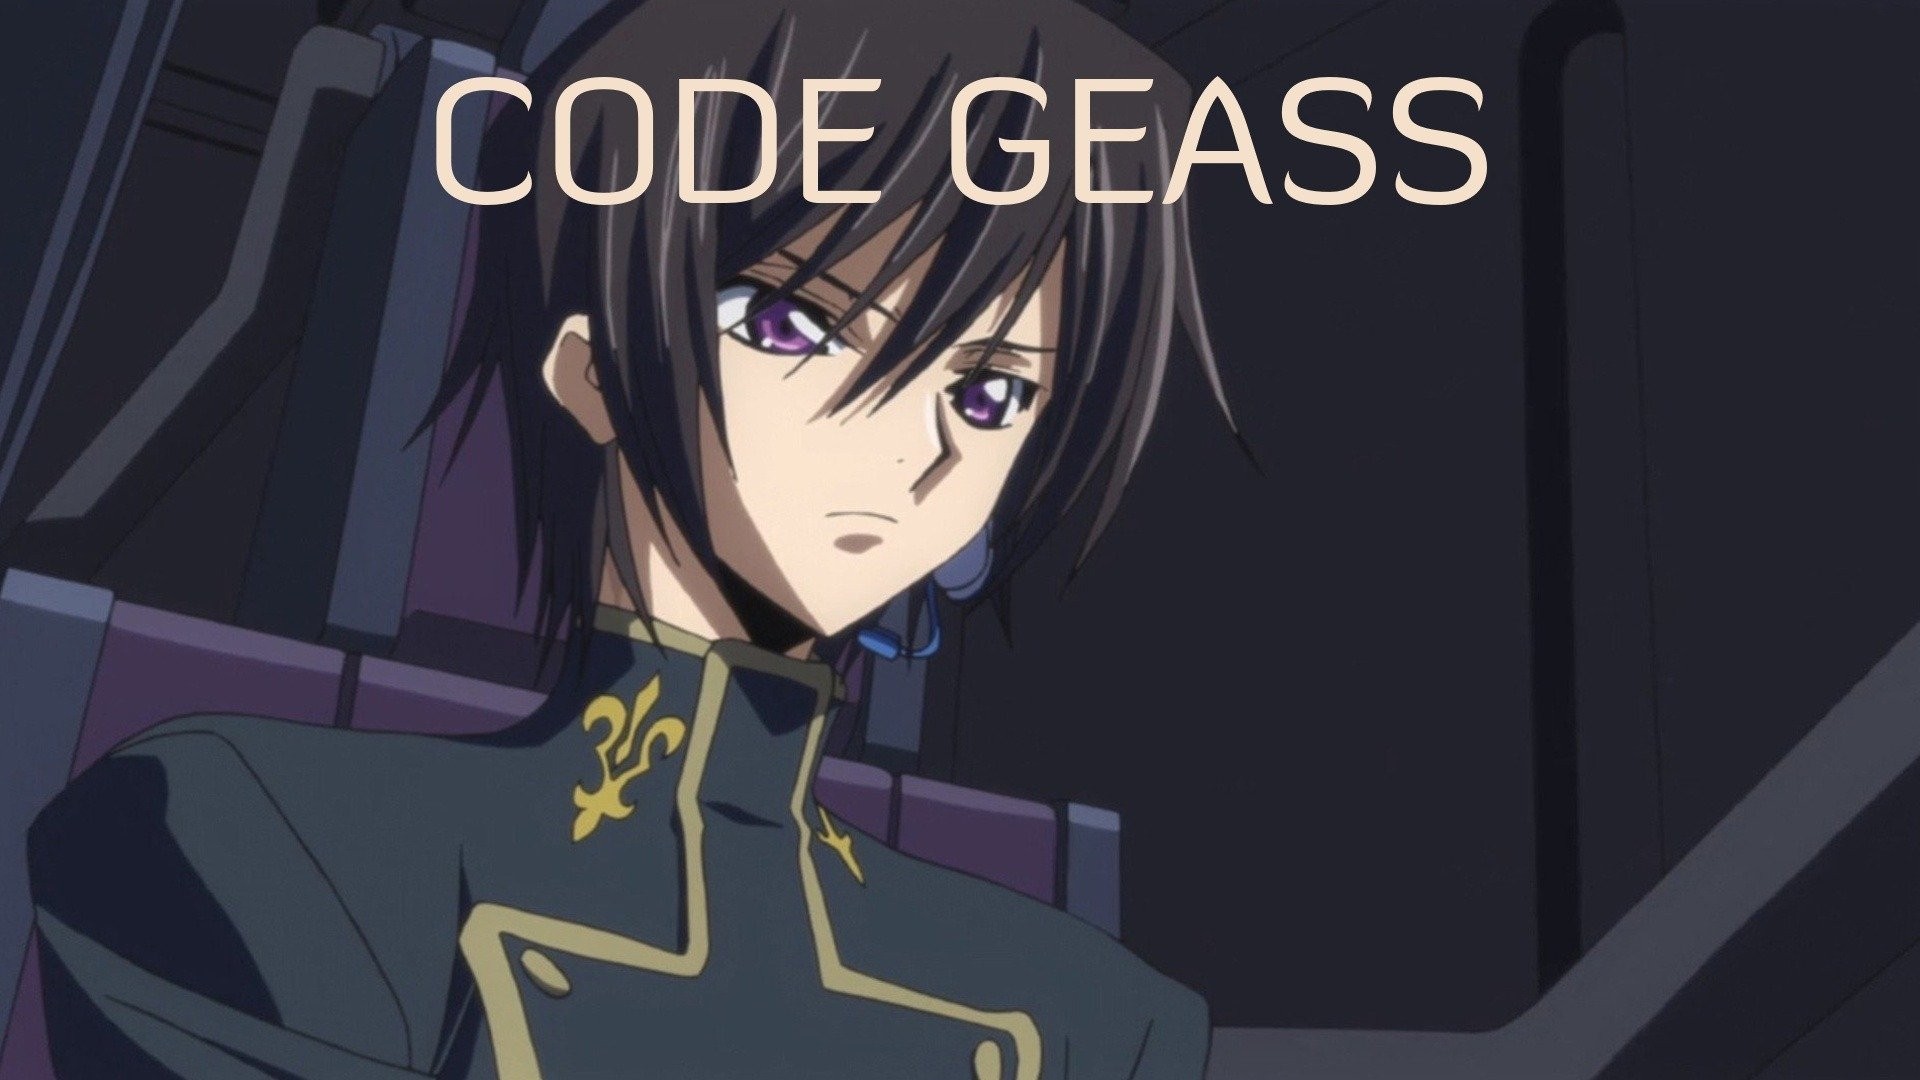 Code Geass HD Anime Wallpaper, C.C. Code Geass HD Mobile Wallpaper in 2023